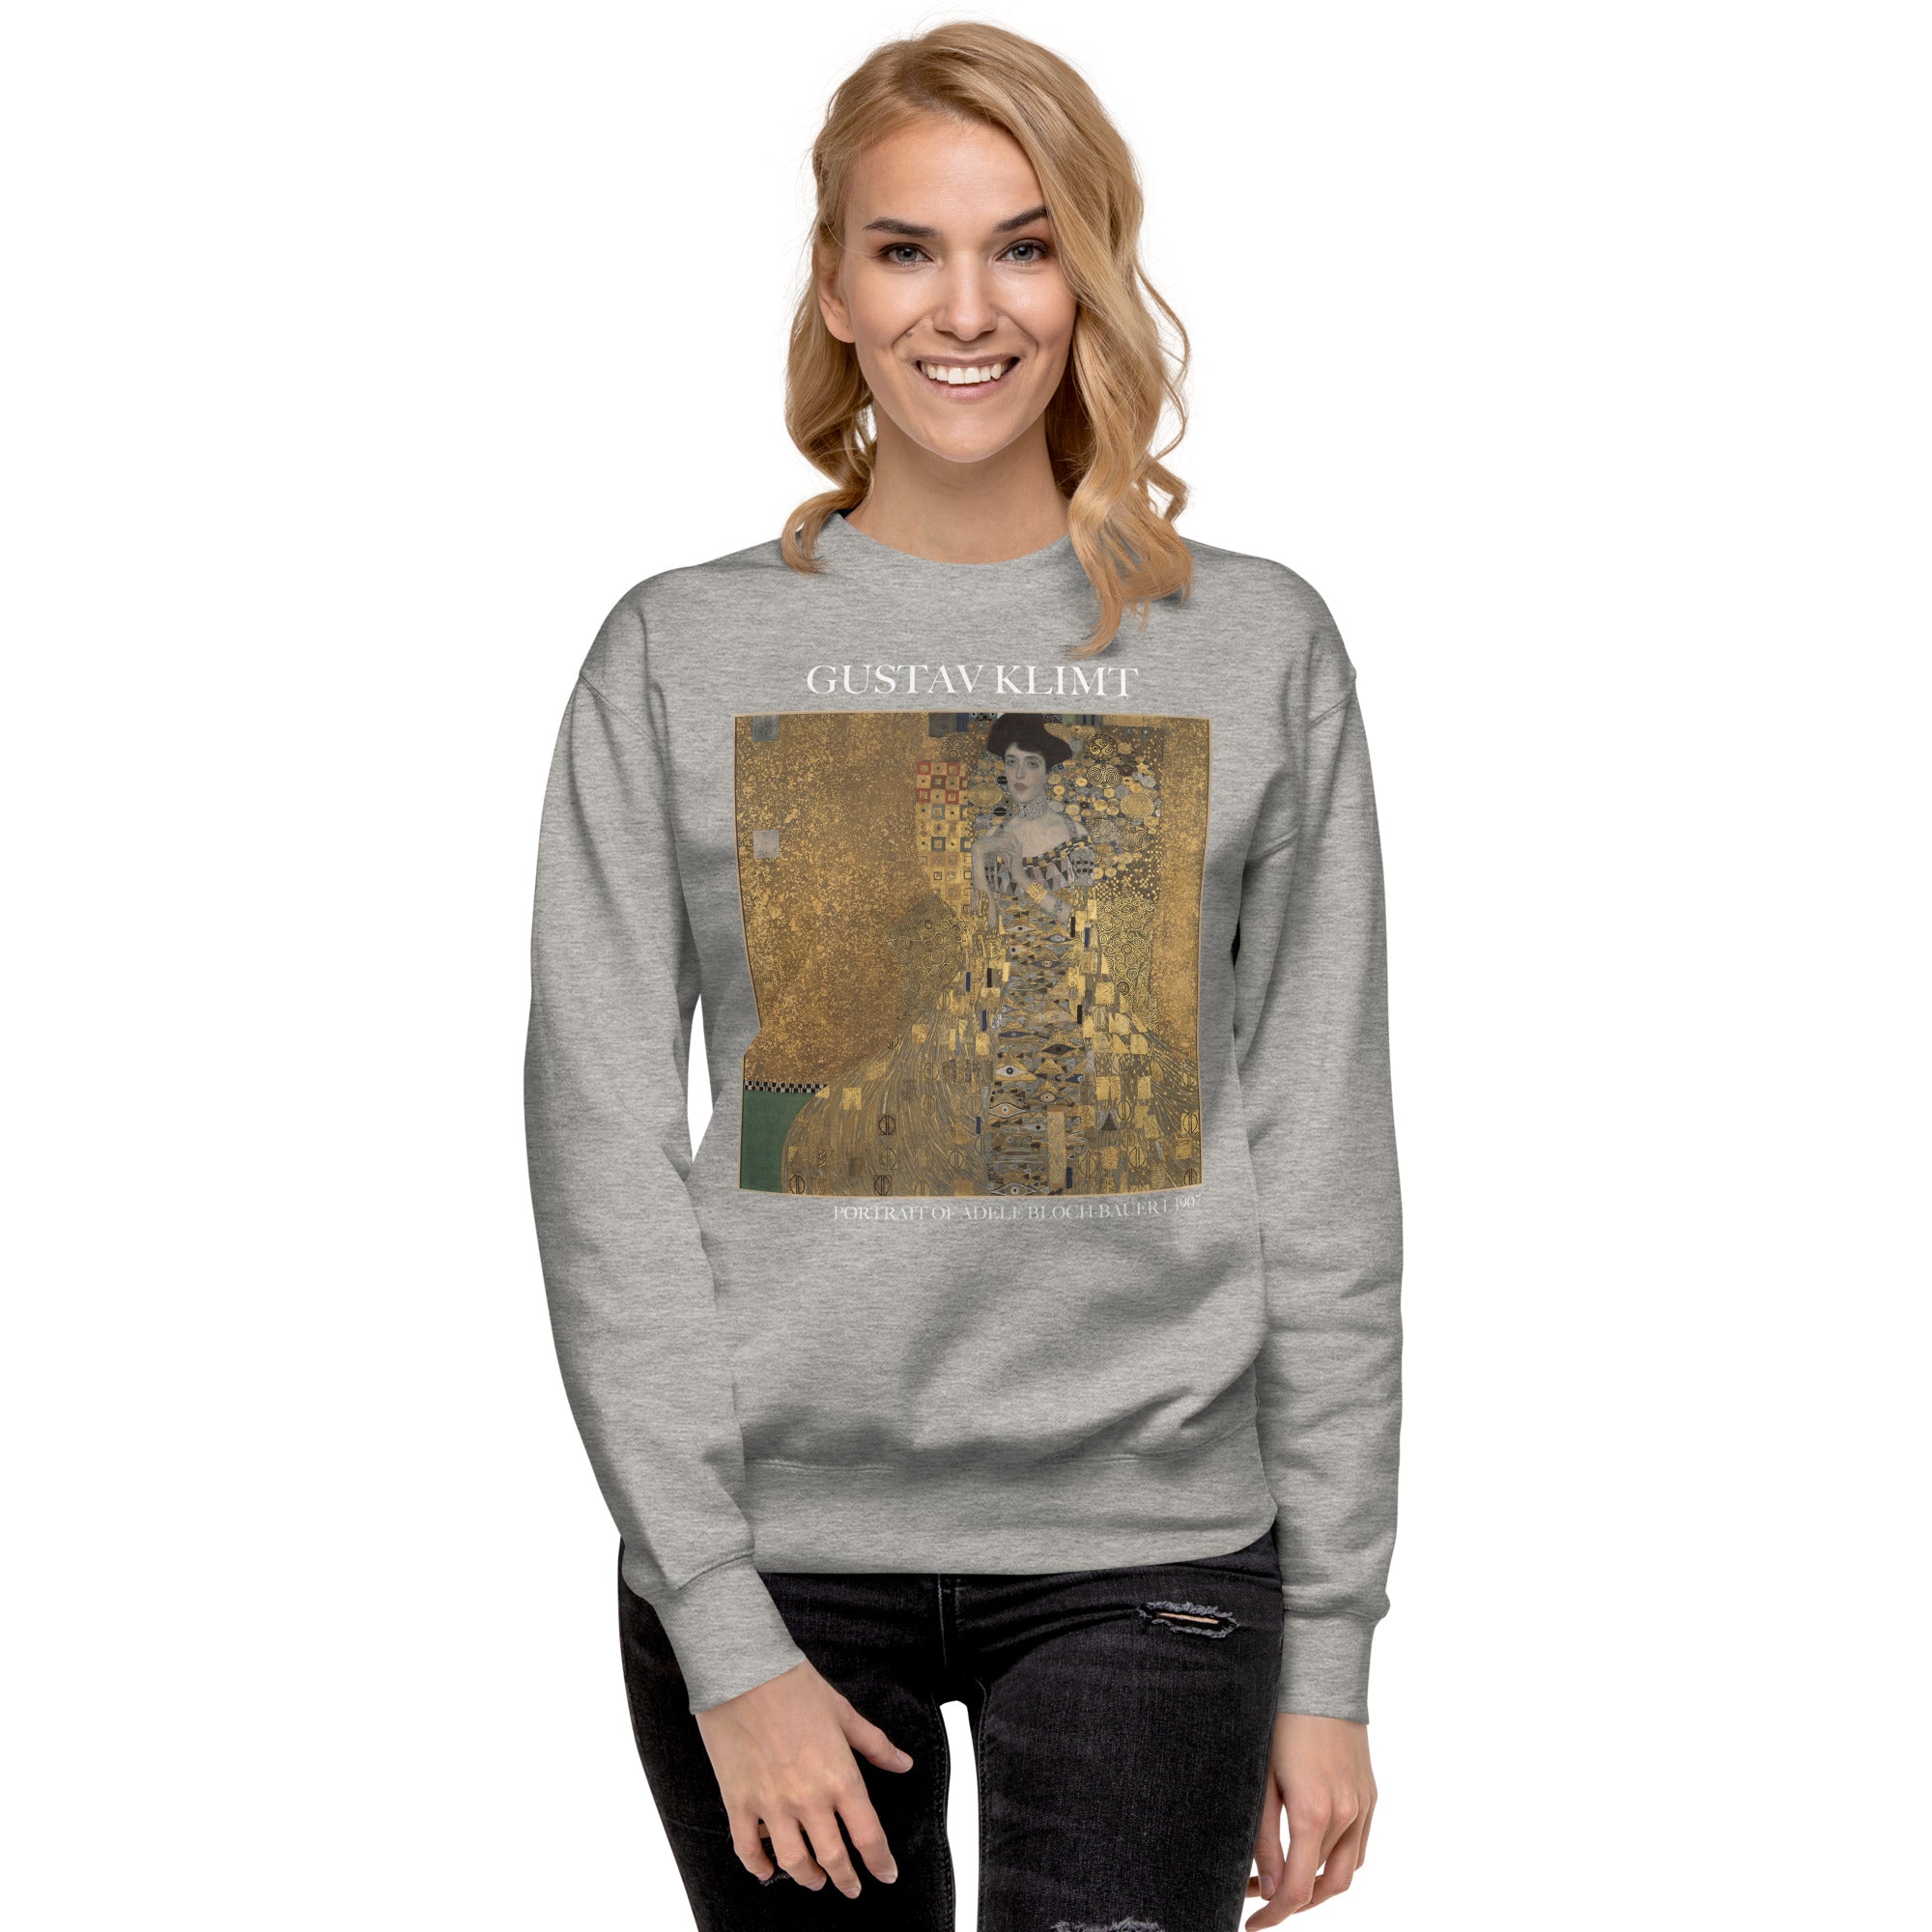 Gustav Klimt 'Portrait of Adele Bloch-Bauer I' Famous Painting Sweatshirt | Unisex Premium Sweatshirt